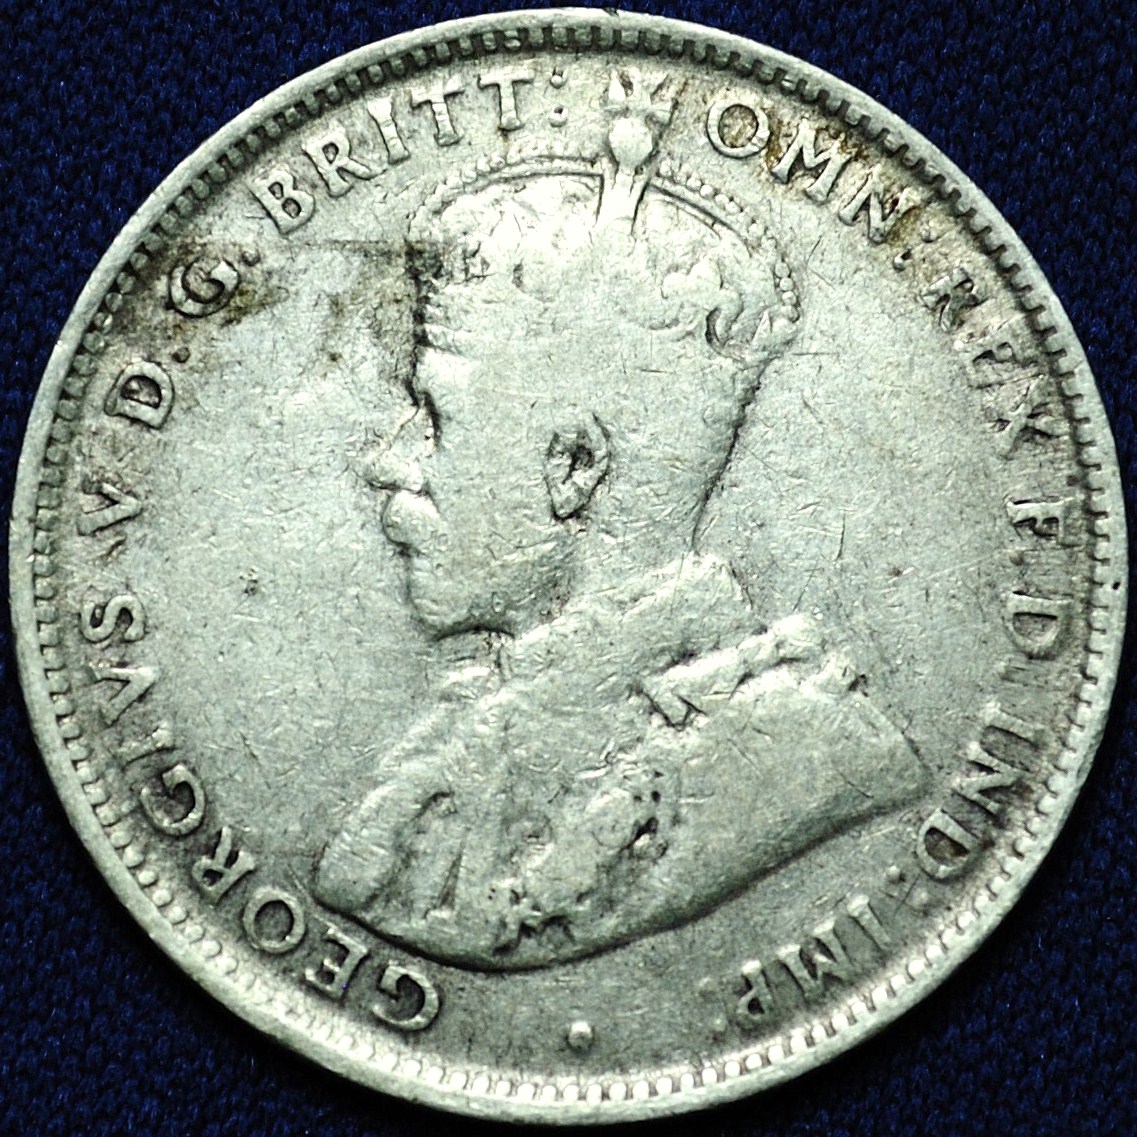 1915 Australian shilling obverse